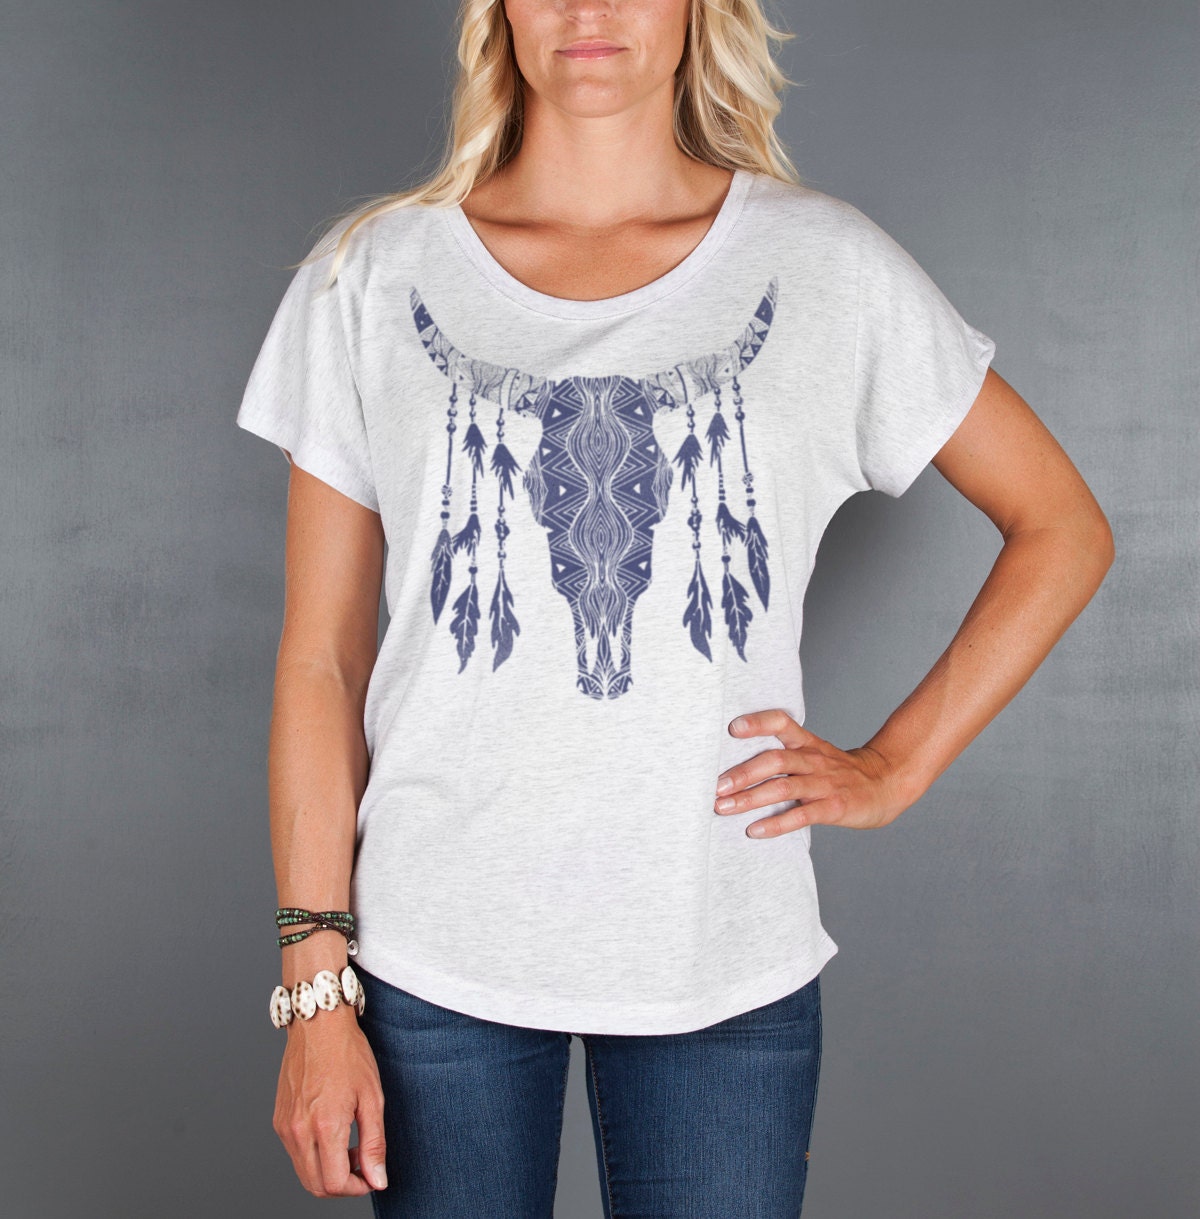 Womens Top Women's Gypsy Bullhorn Shirt Loose by Feather4Arrow